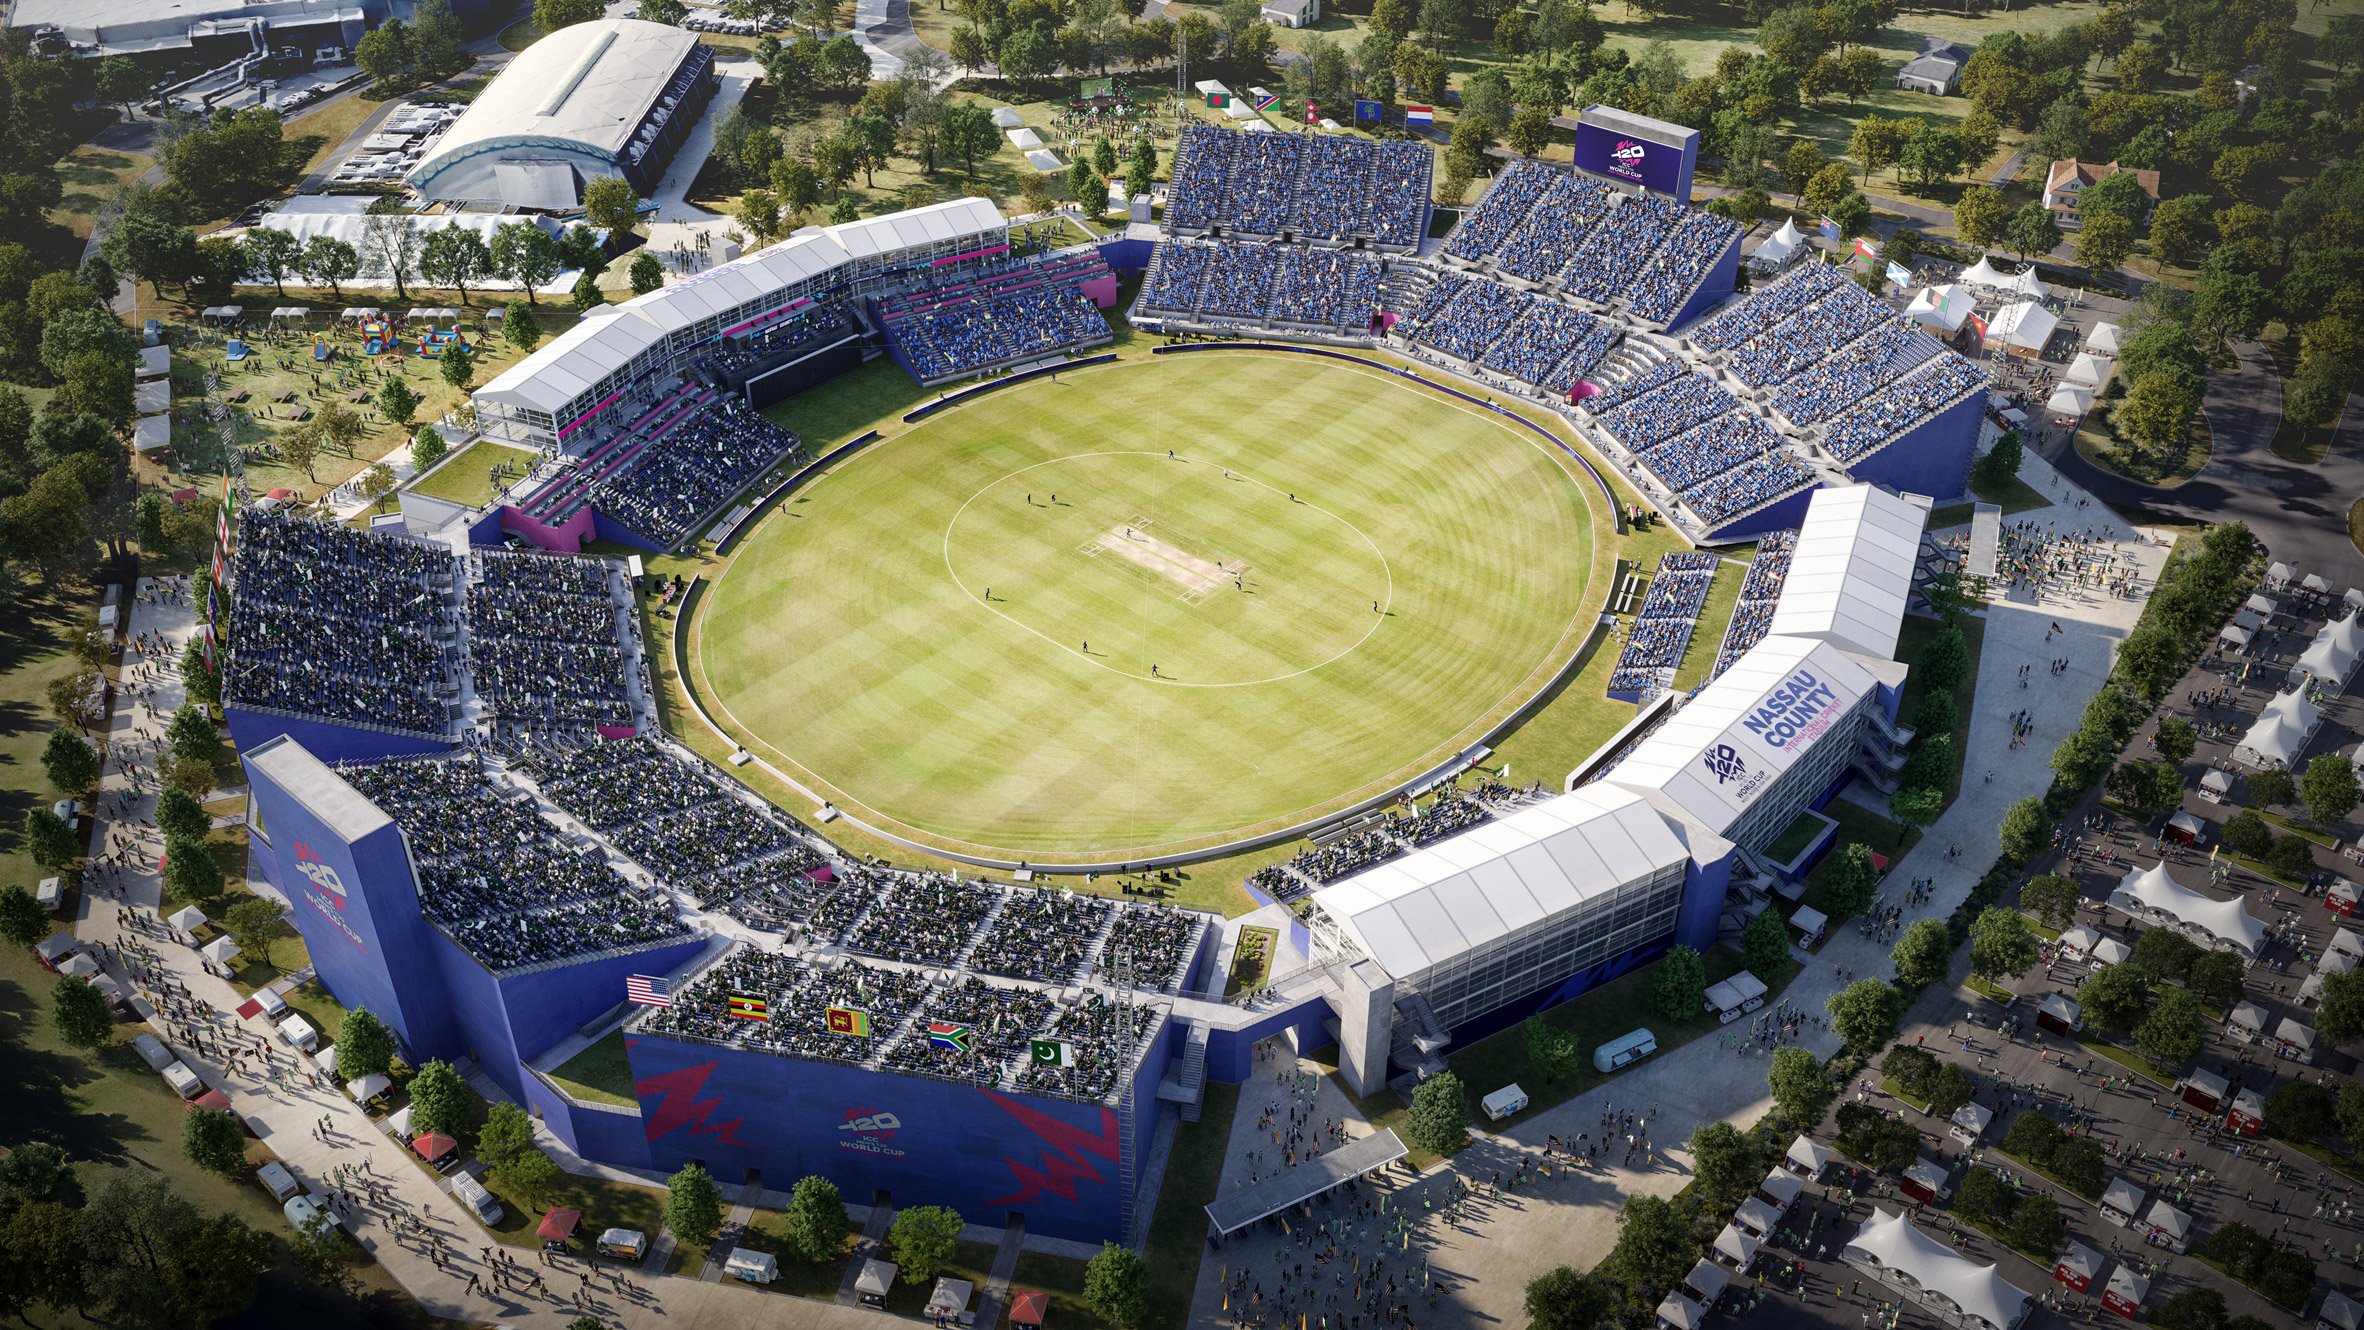 pitch report and analysis of nassau cricket stadium new york